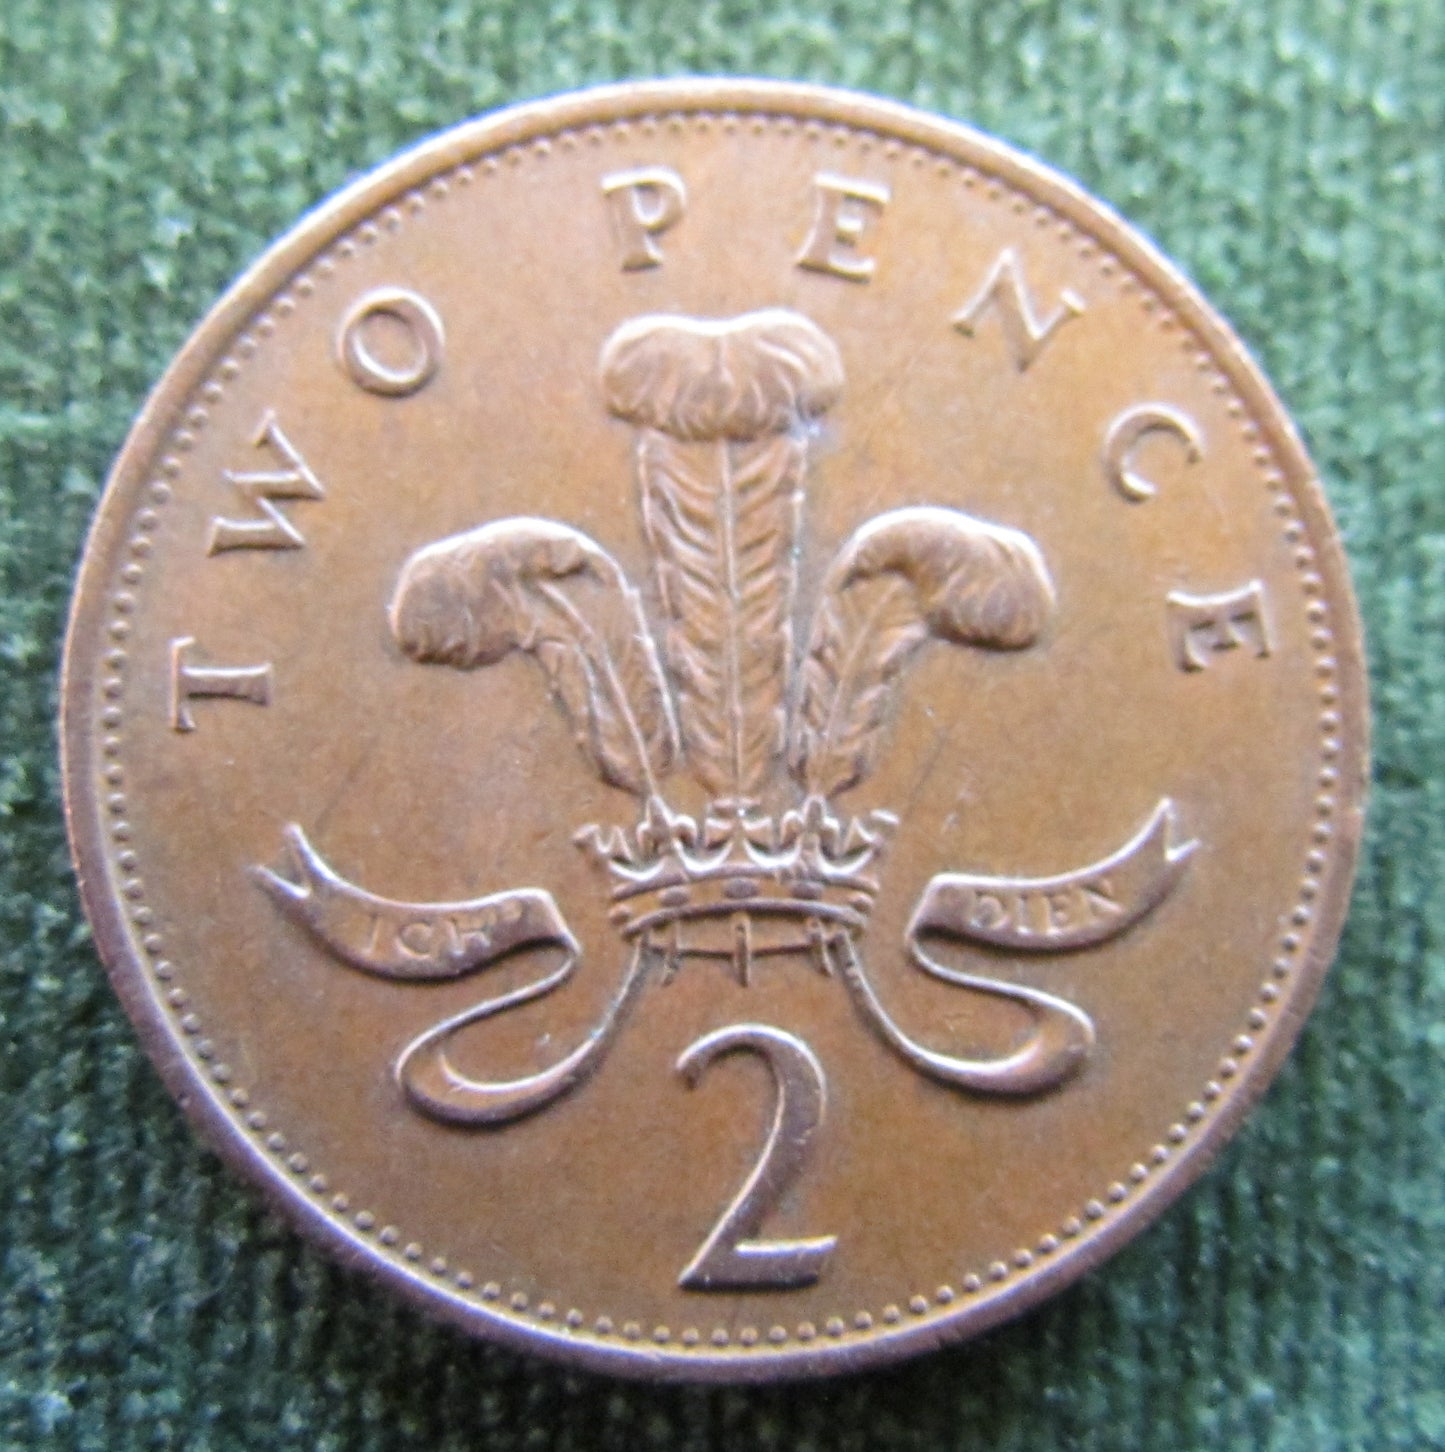 GB British UK English 1989 2 New Pence Queen Elizabeth II Coin